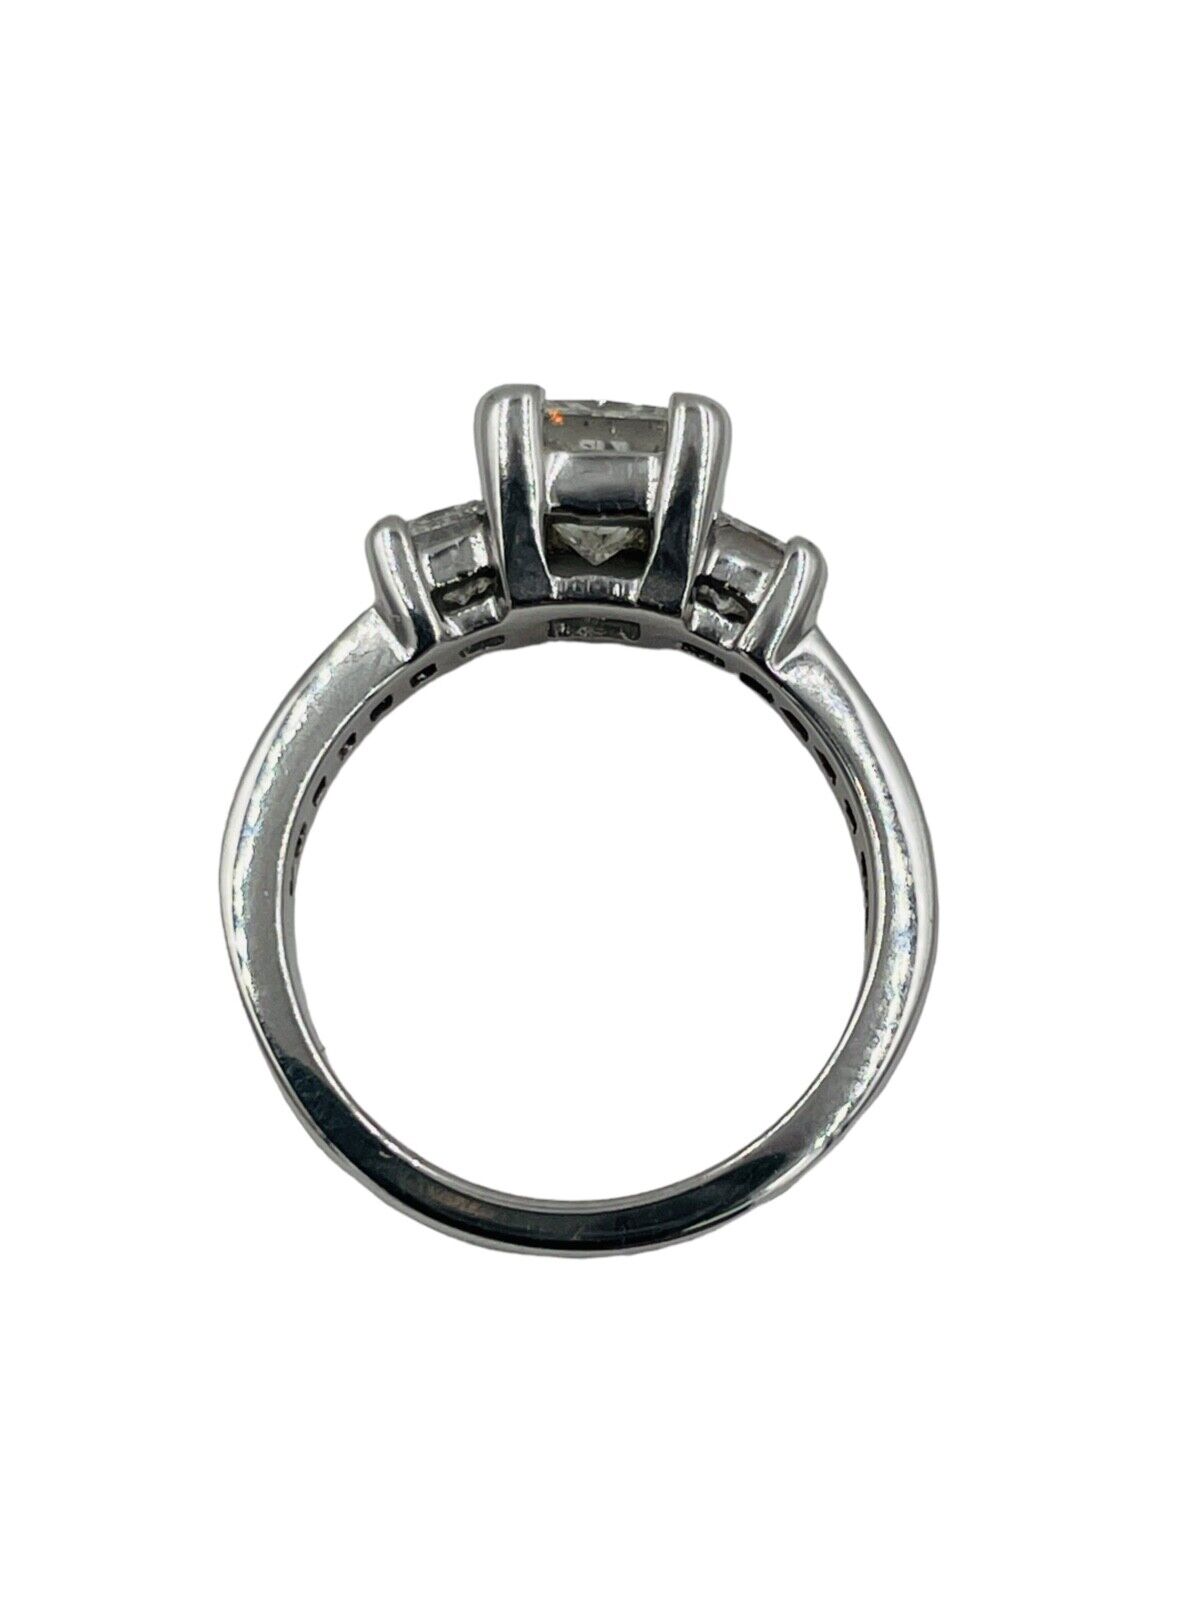 Engagement Ring 18k white Gold Princess cut diamond Ring 2.25cts